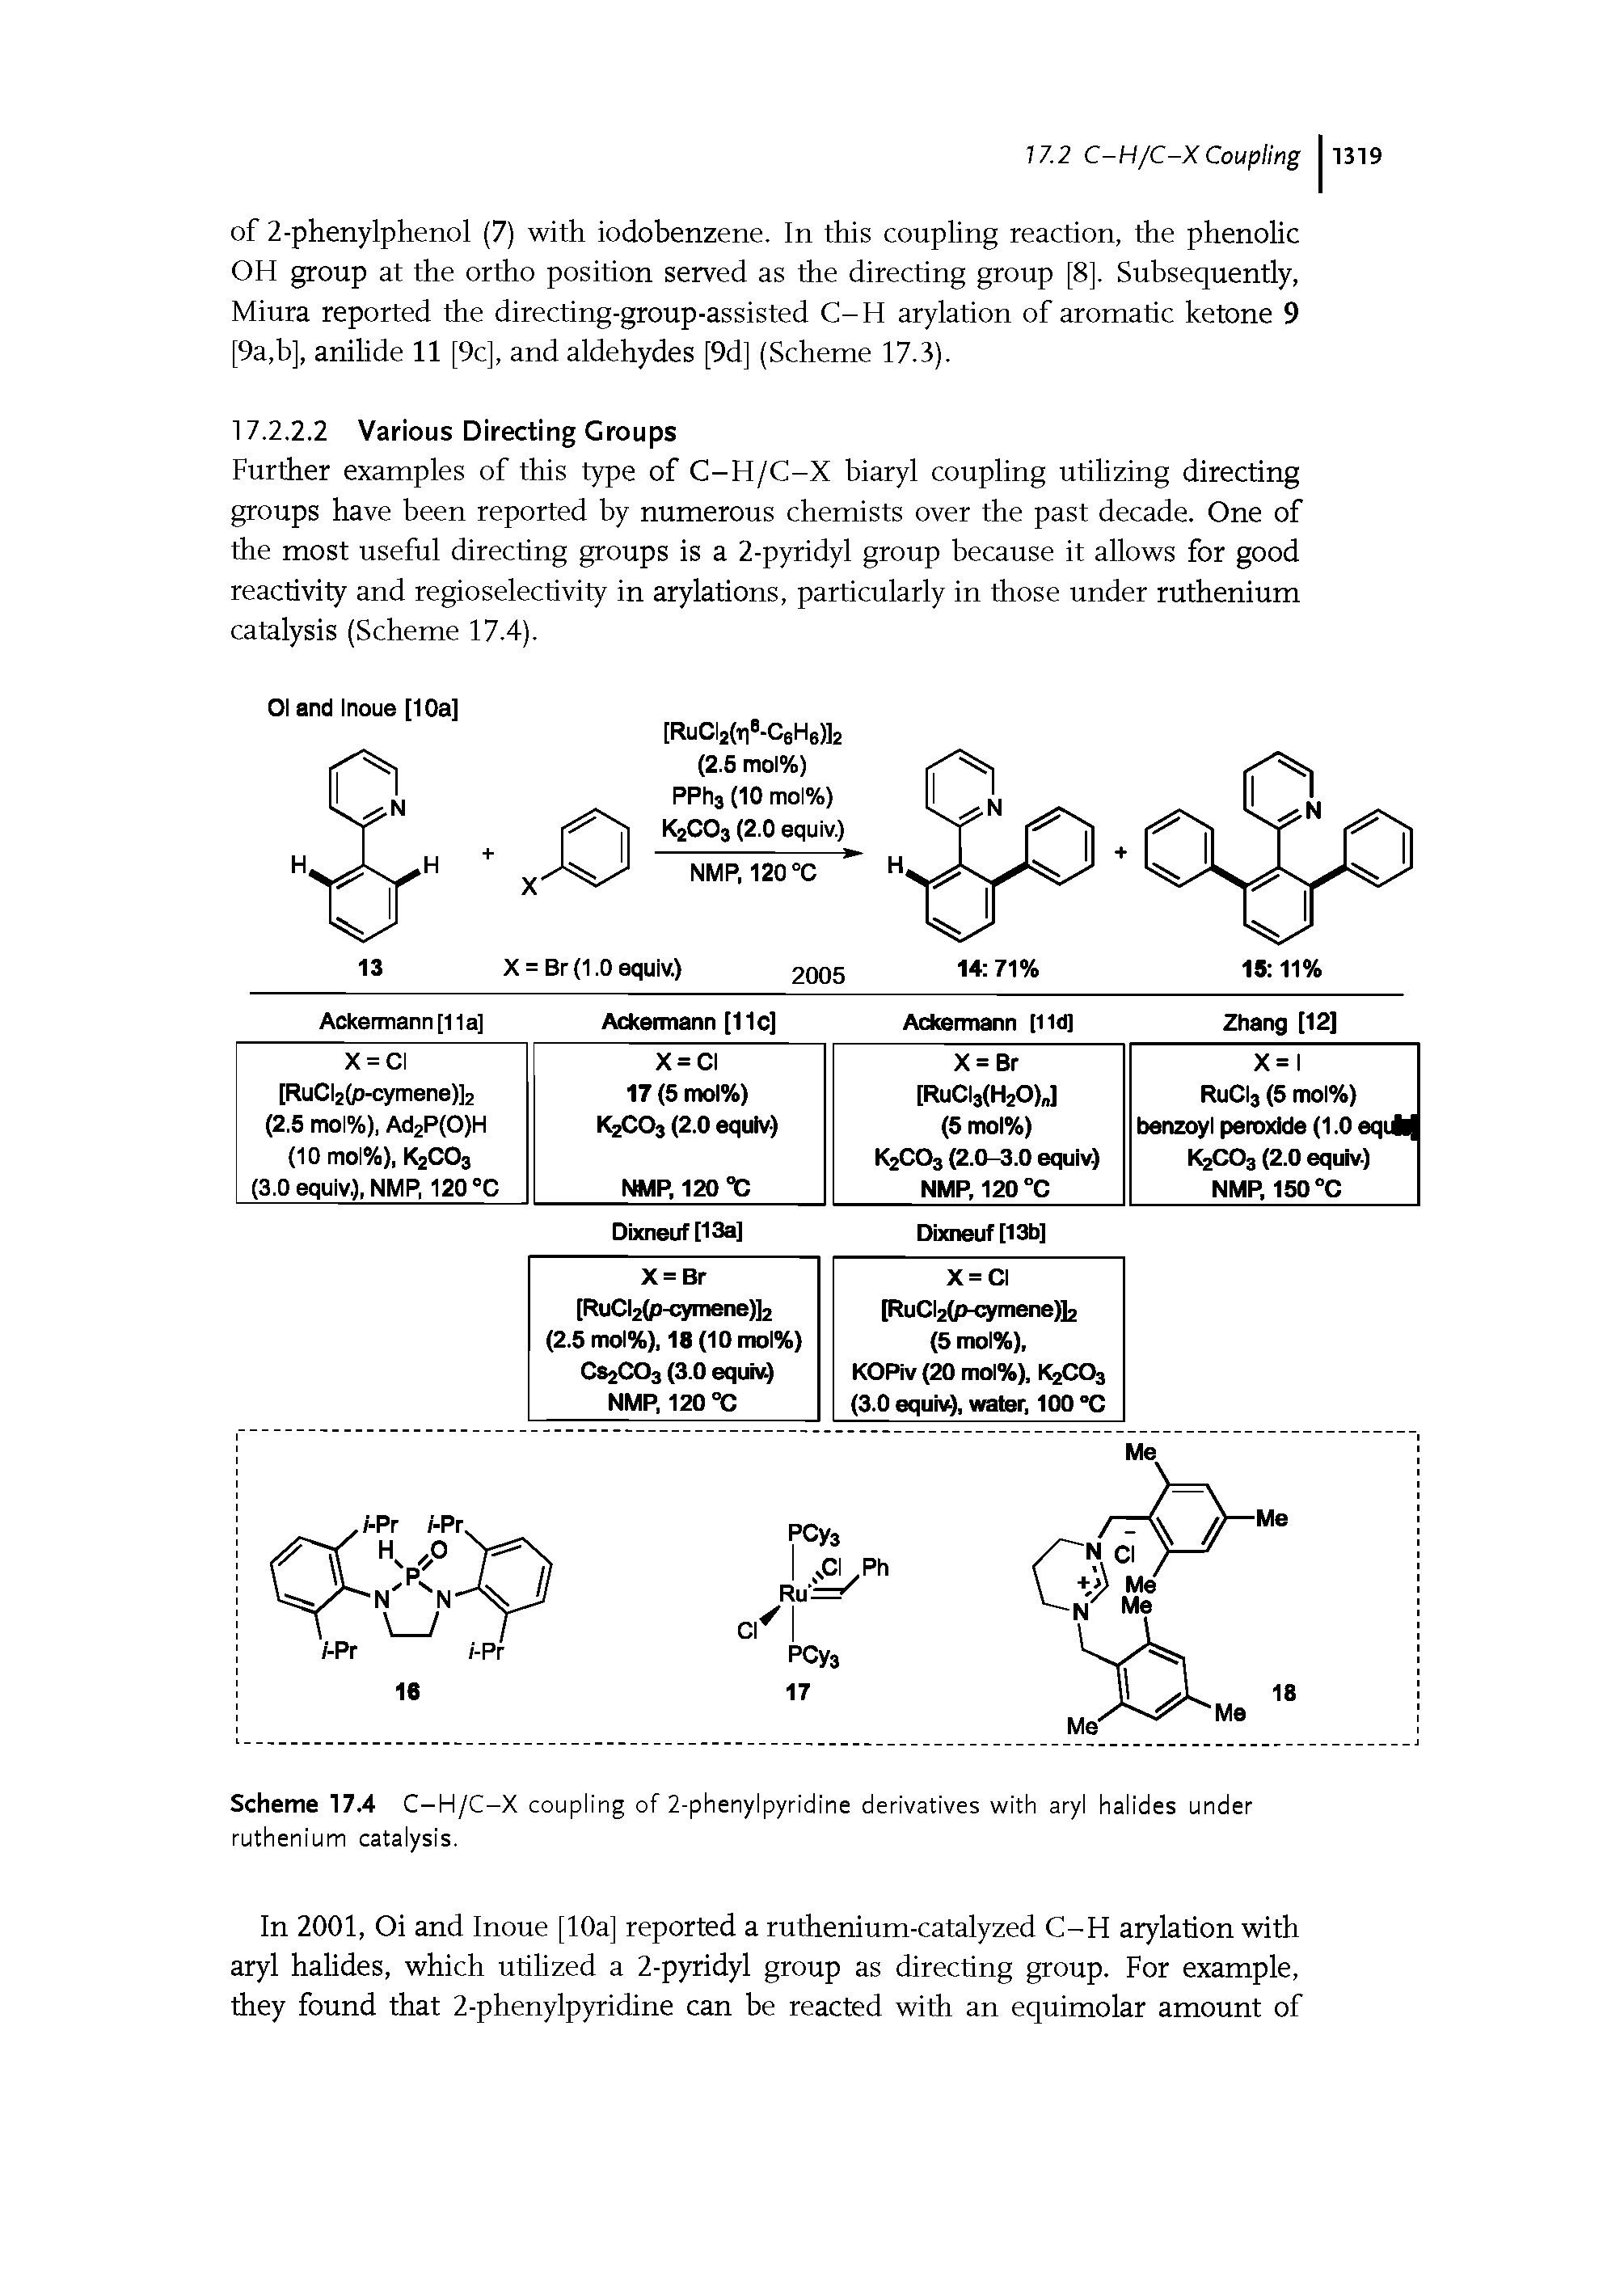 Scheme 17.4 C-H/C-X coupling of 2-phenylpyridine derivatives with aryl halides under ruthenium catalysis.